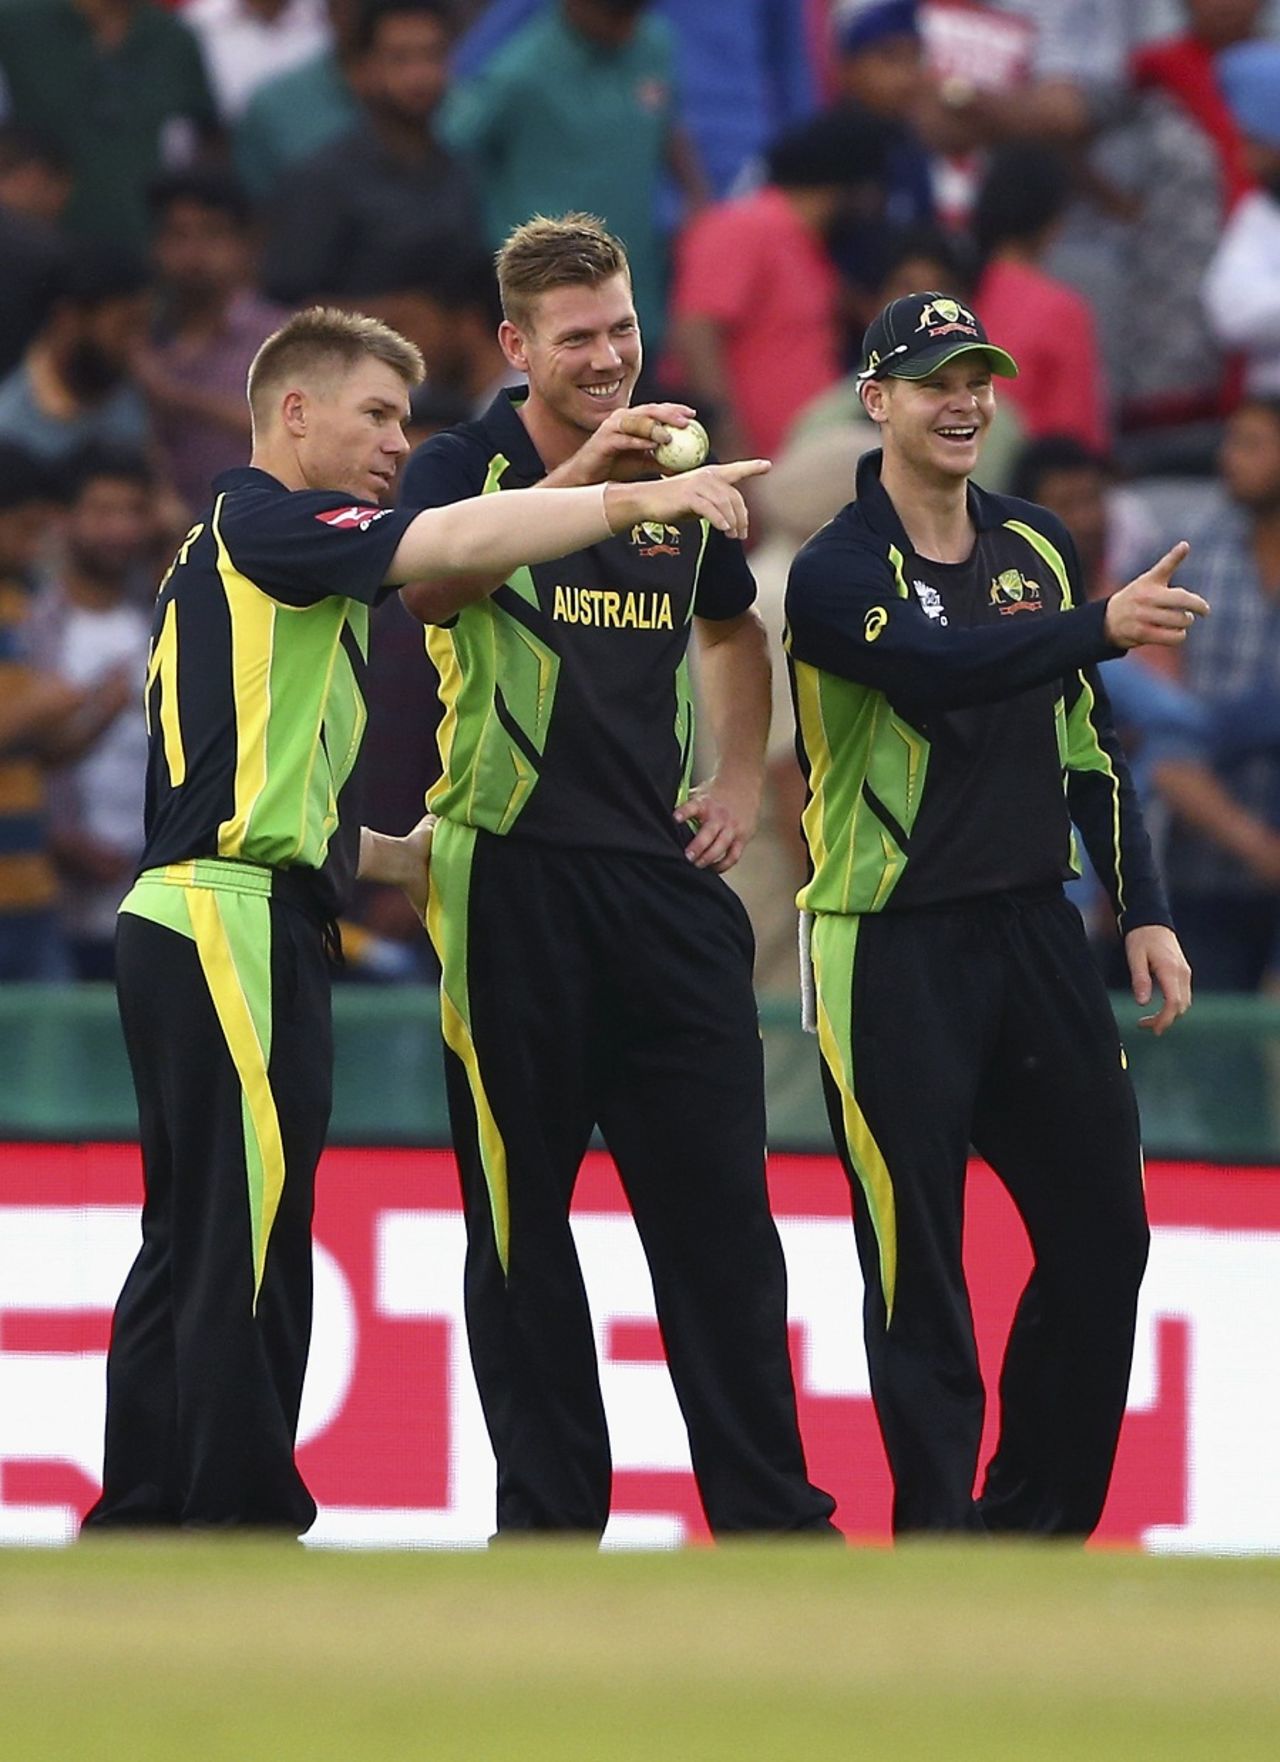 James Faulkner, Steven Smith and David Warner celebrate a wicket, Australia v Pakistan, World T20 2016, Group 2, Mohali, March 25, 2016